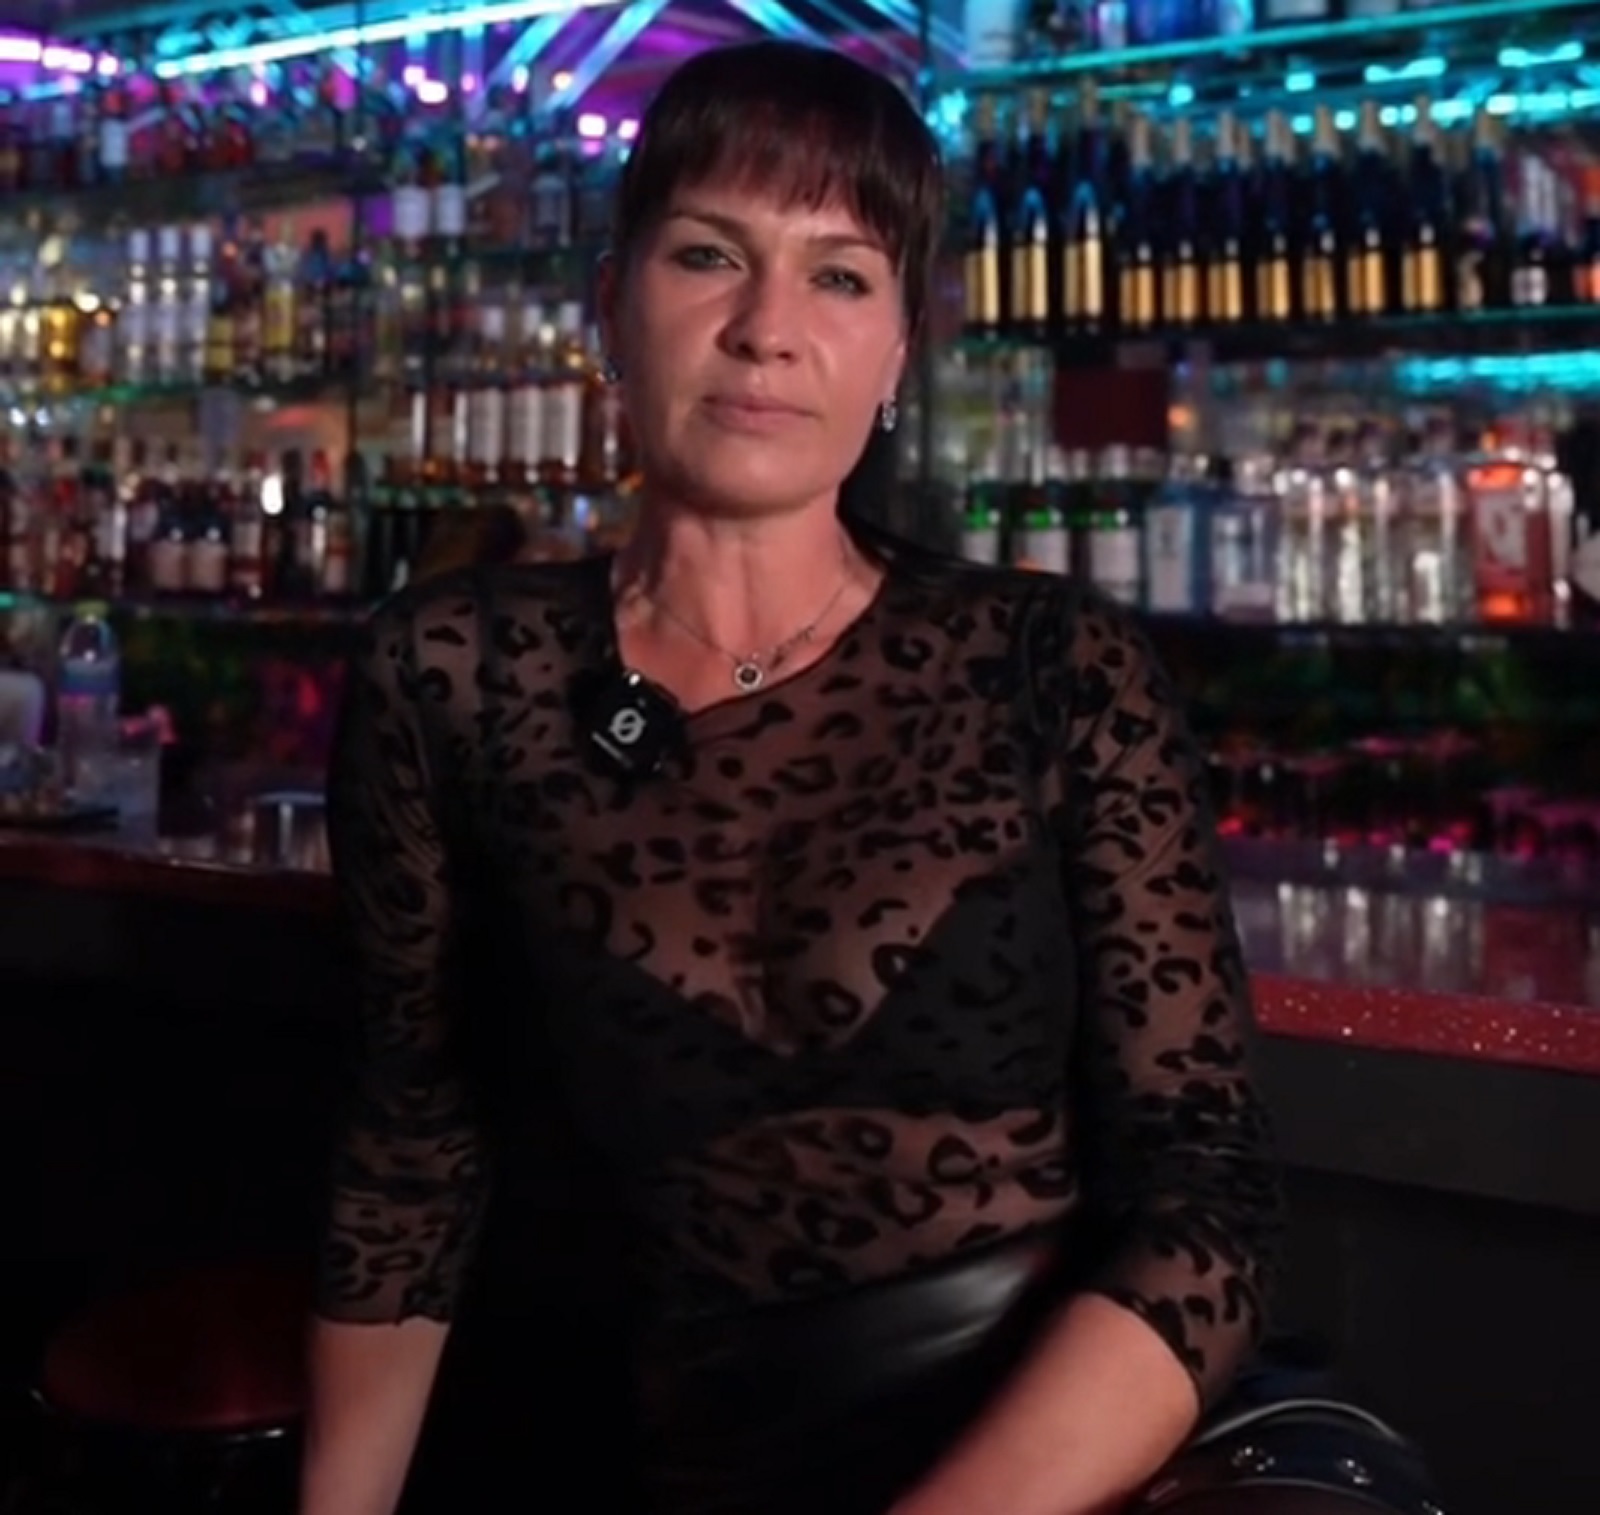 Scorpios Music Bar: “Με απέλυσαν” λέει η γυναίκα που έκανε viral το μαγαζί στο TikTok